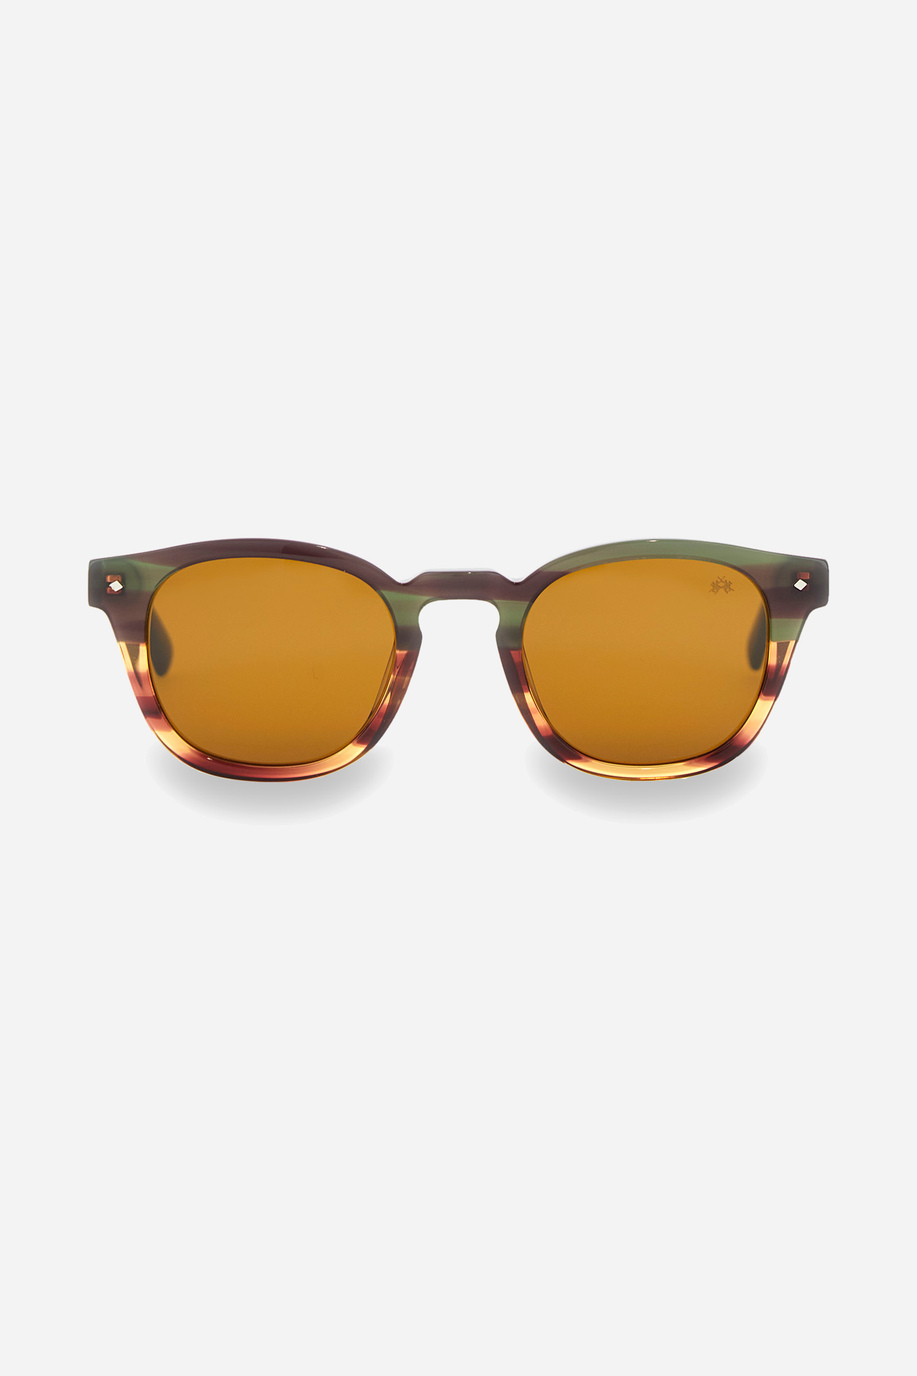 Herren Sonnenbrille Modell pantos - Brille | La Martina - Official Online Shop